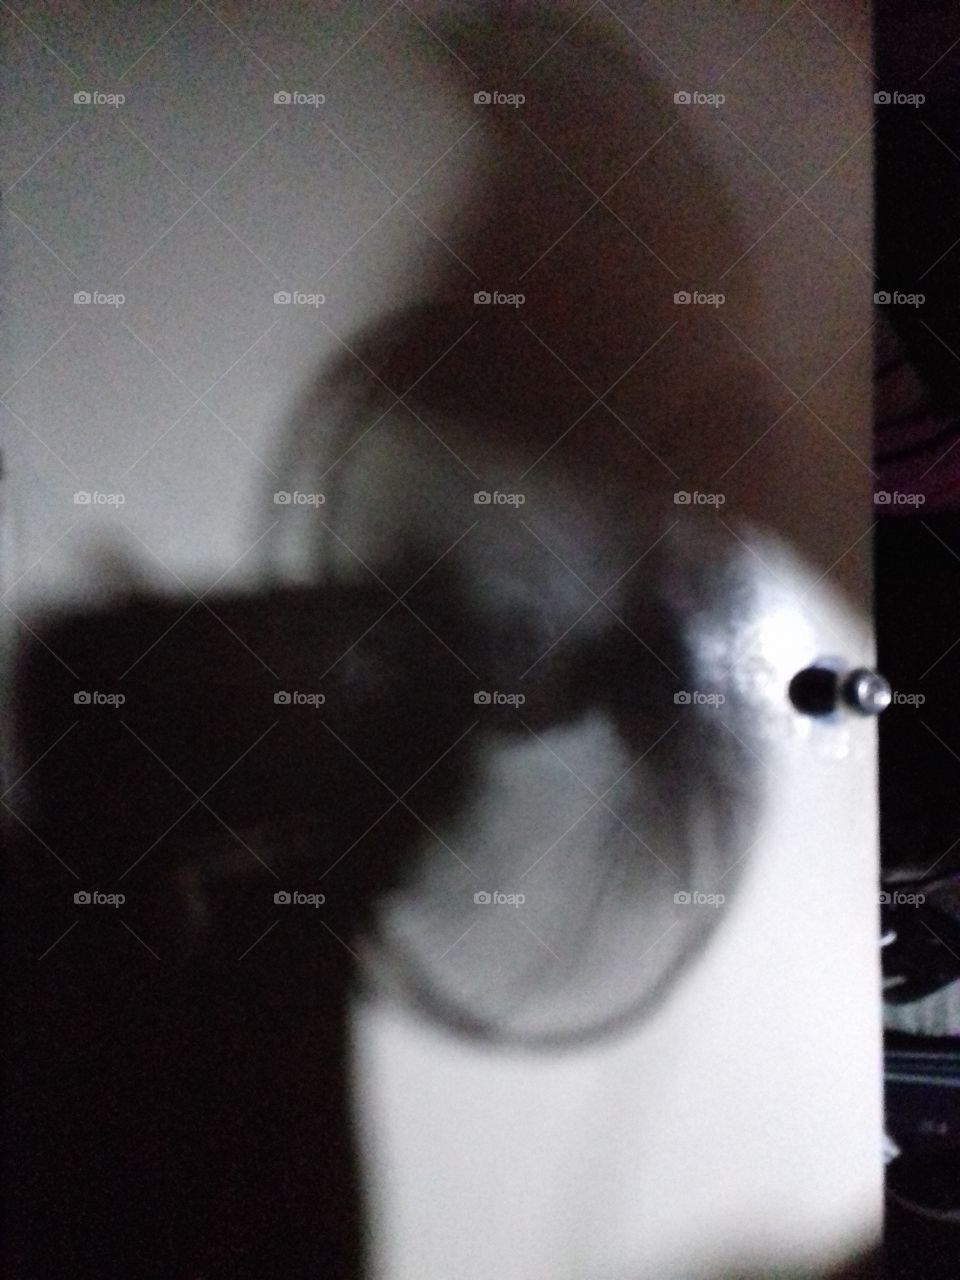 shadow of my electric fan on the half-open door on a warm night